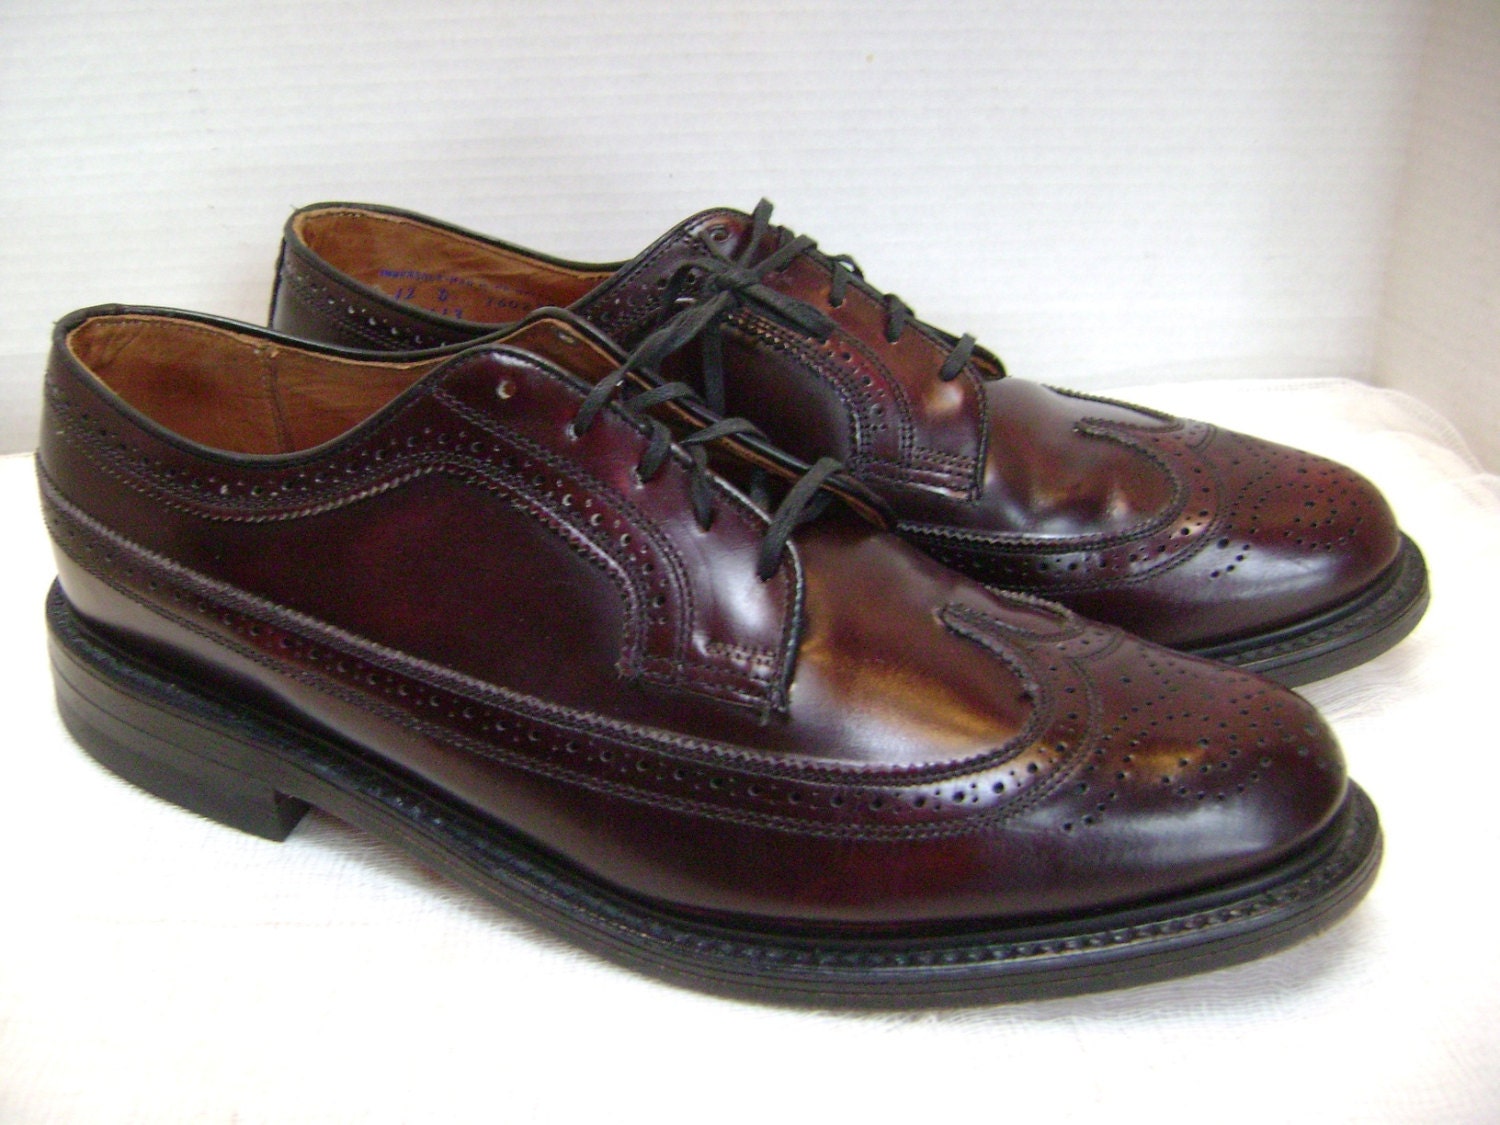 Vintage Wingtip Oxford Shoes Burgundy Broques Oxblood